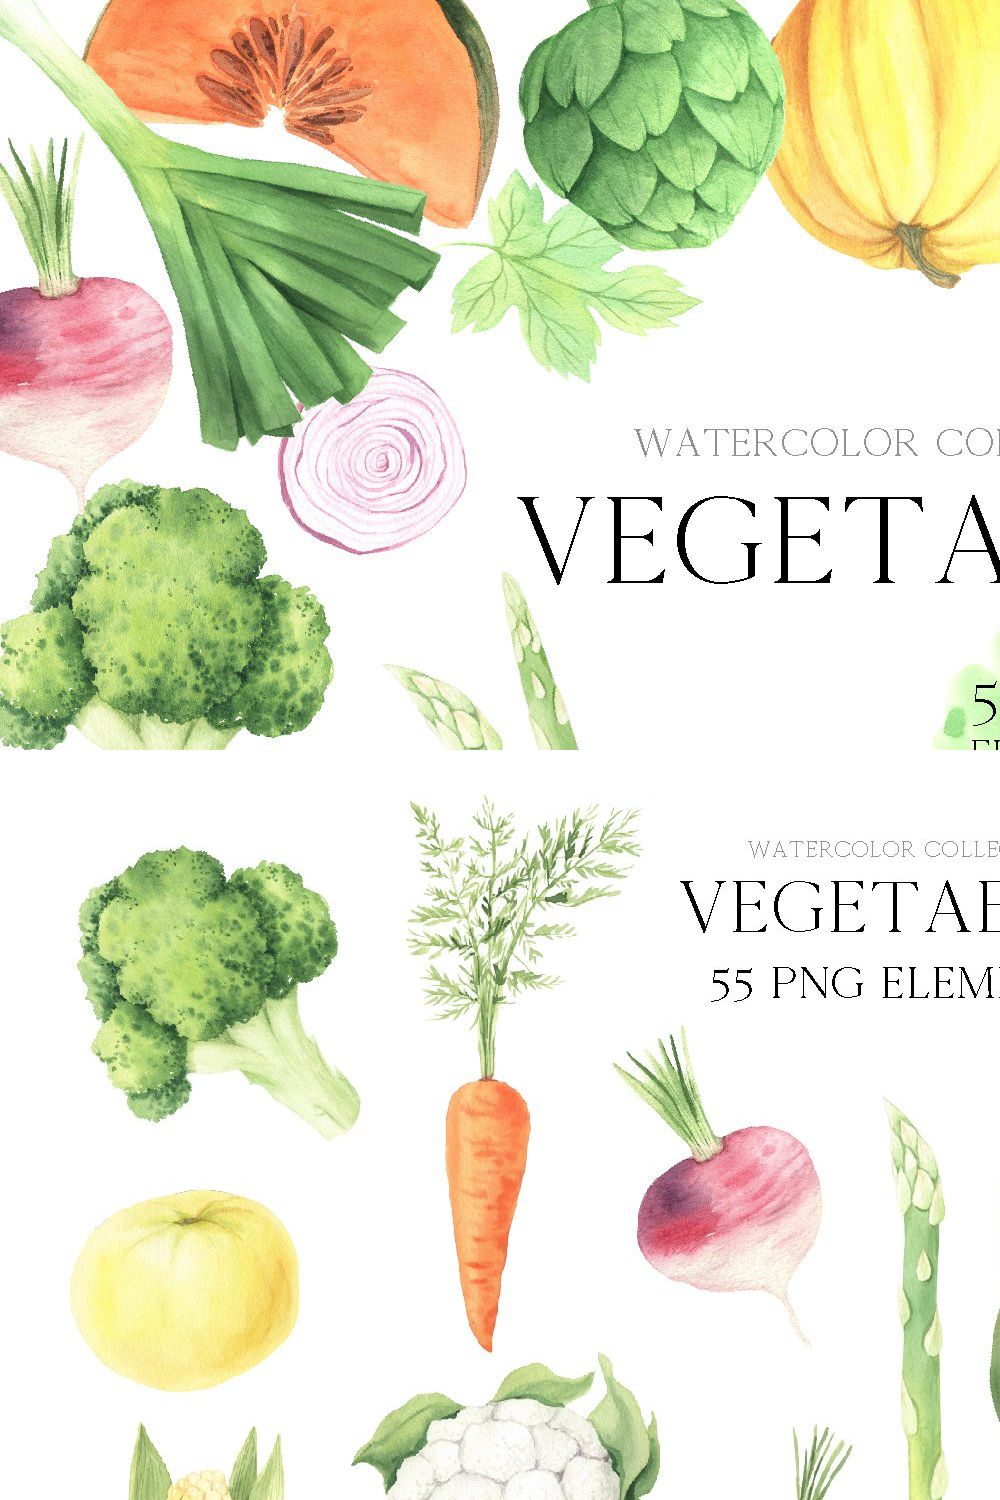 Watercolor Vegetables clipart pinterest preview image.